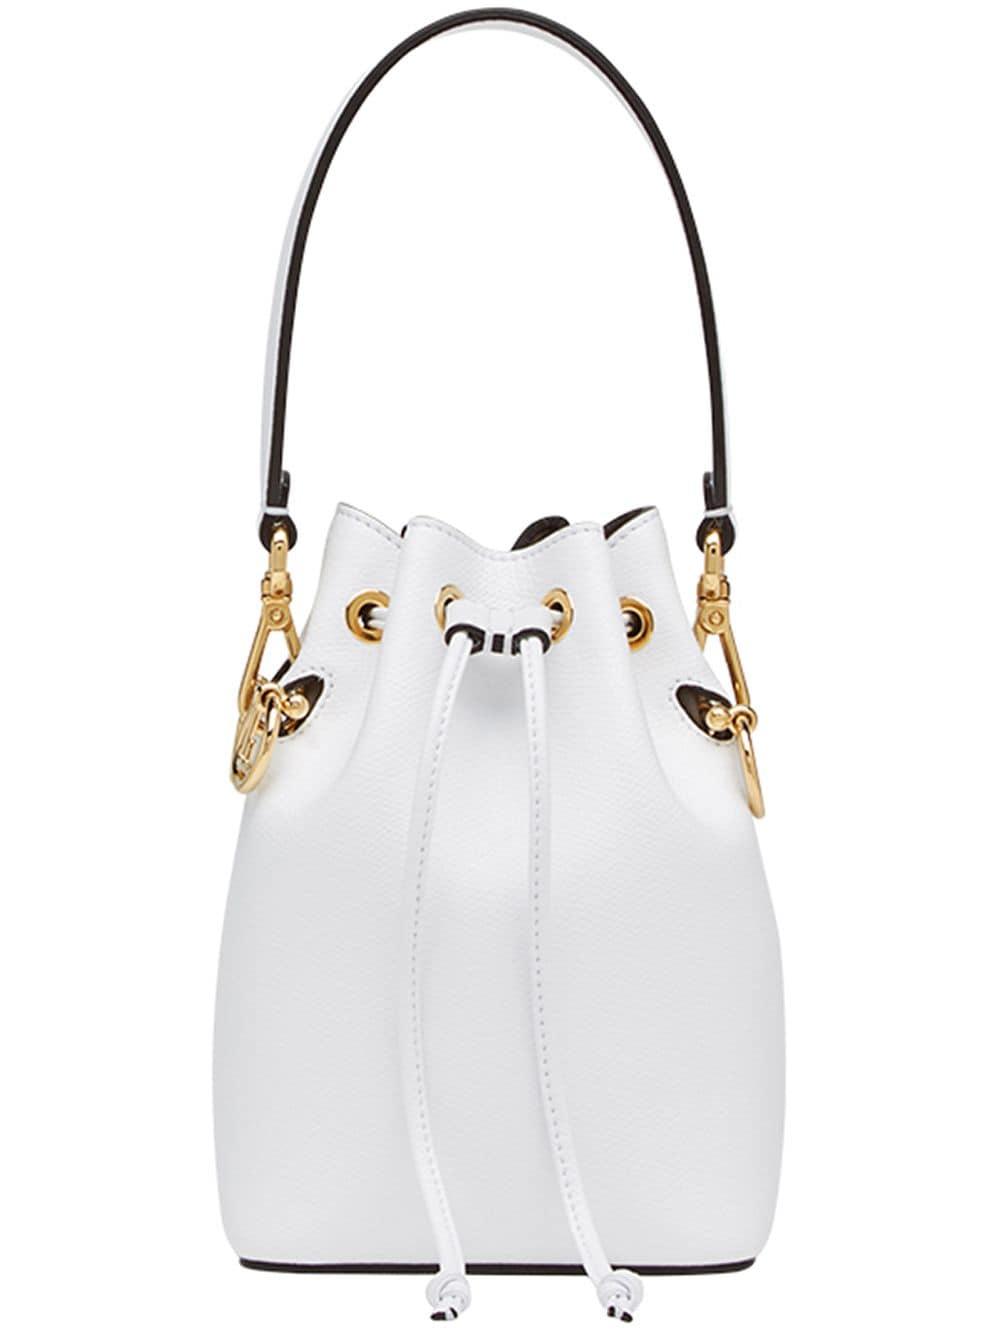 Fendi Bucket Mini Bag in White - Lyst